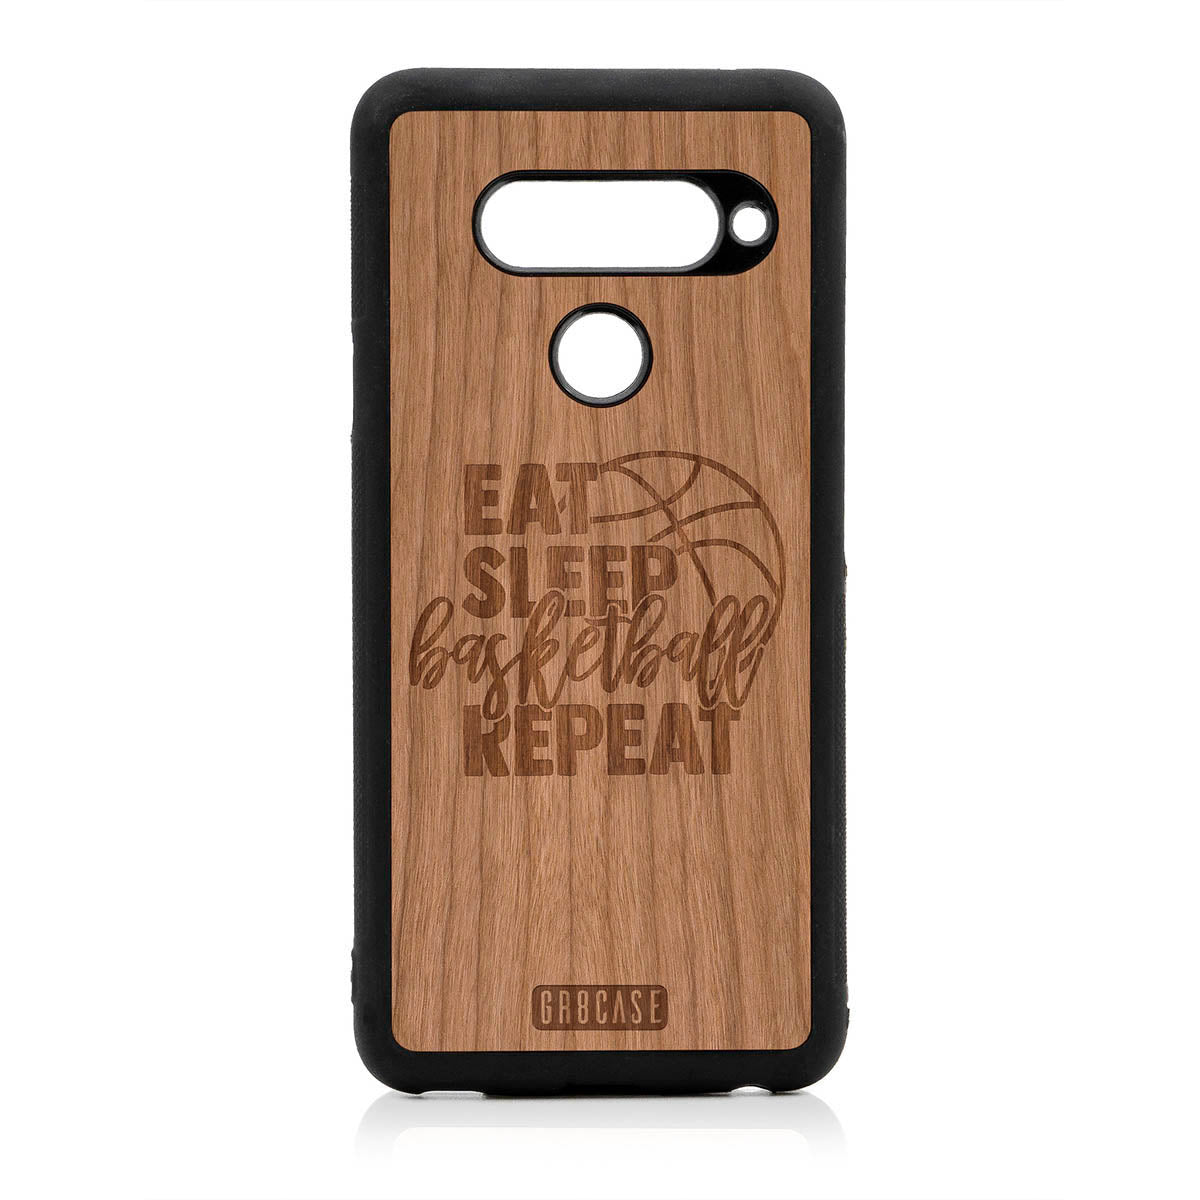 Eat Sleep Basketball Repeat Design Wood Case For LG V40